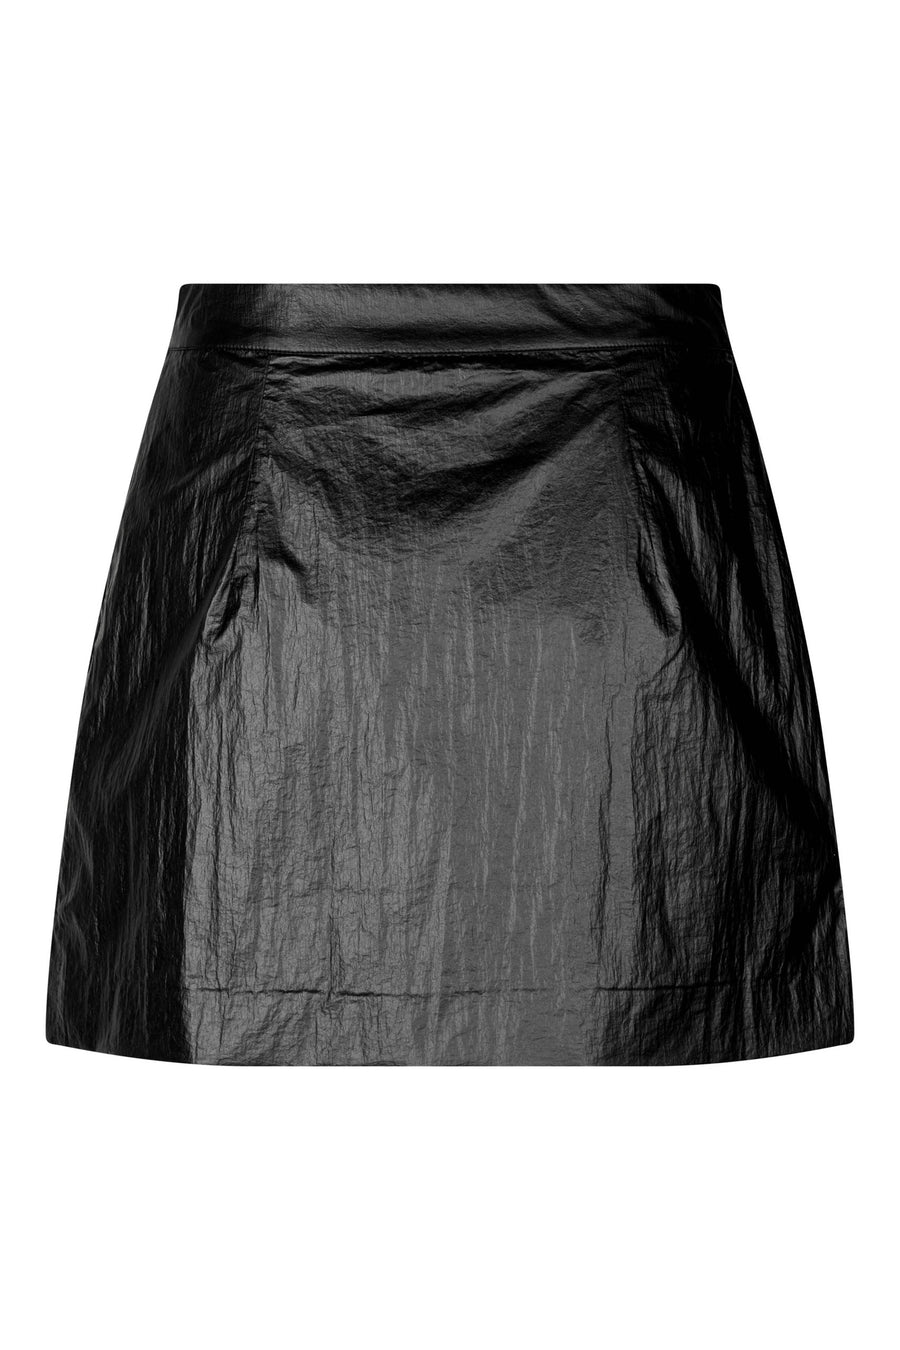 Record skirt, black shine